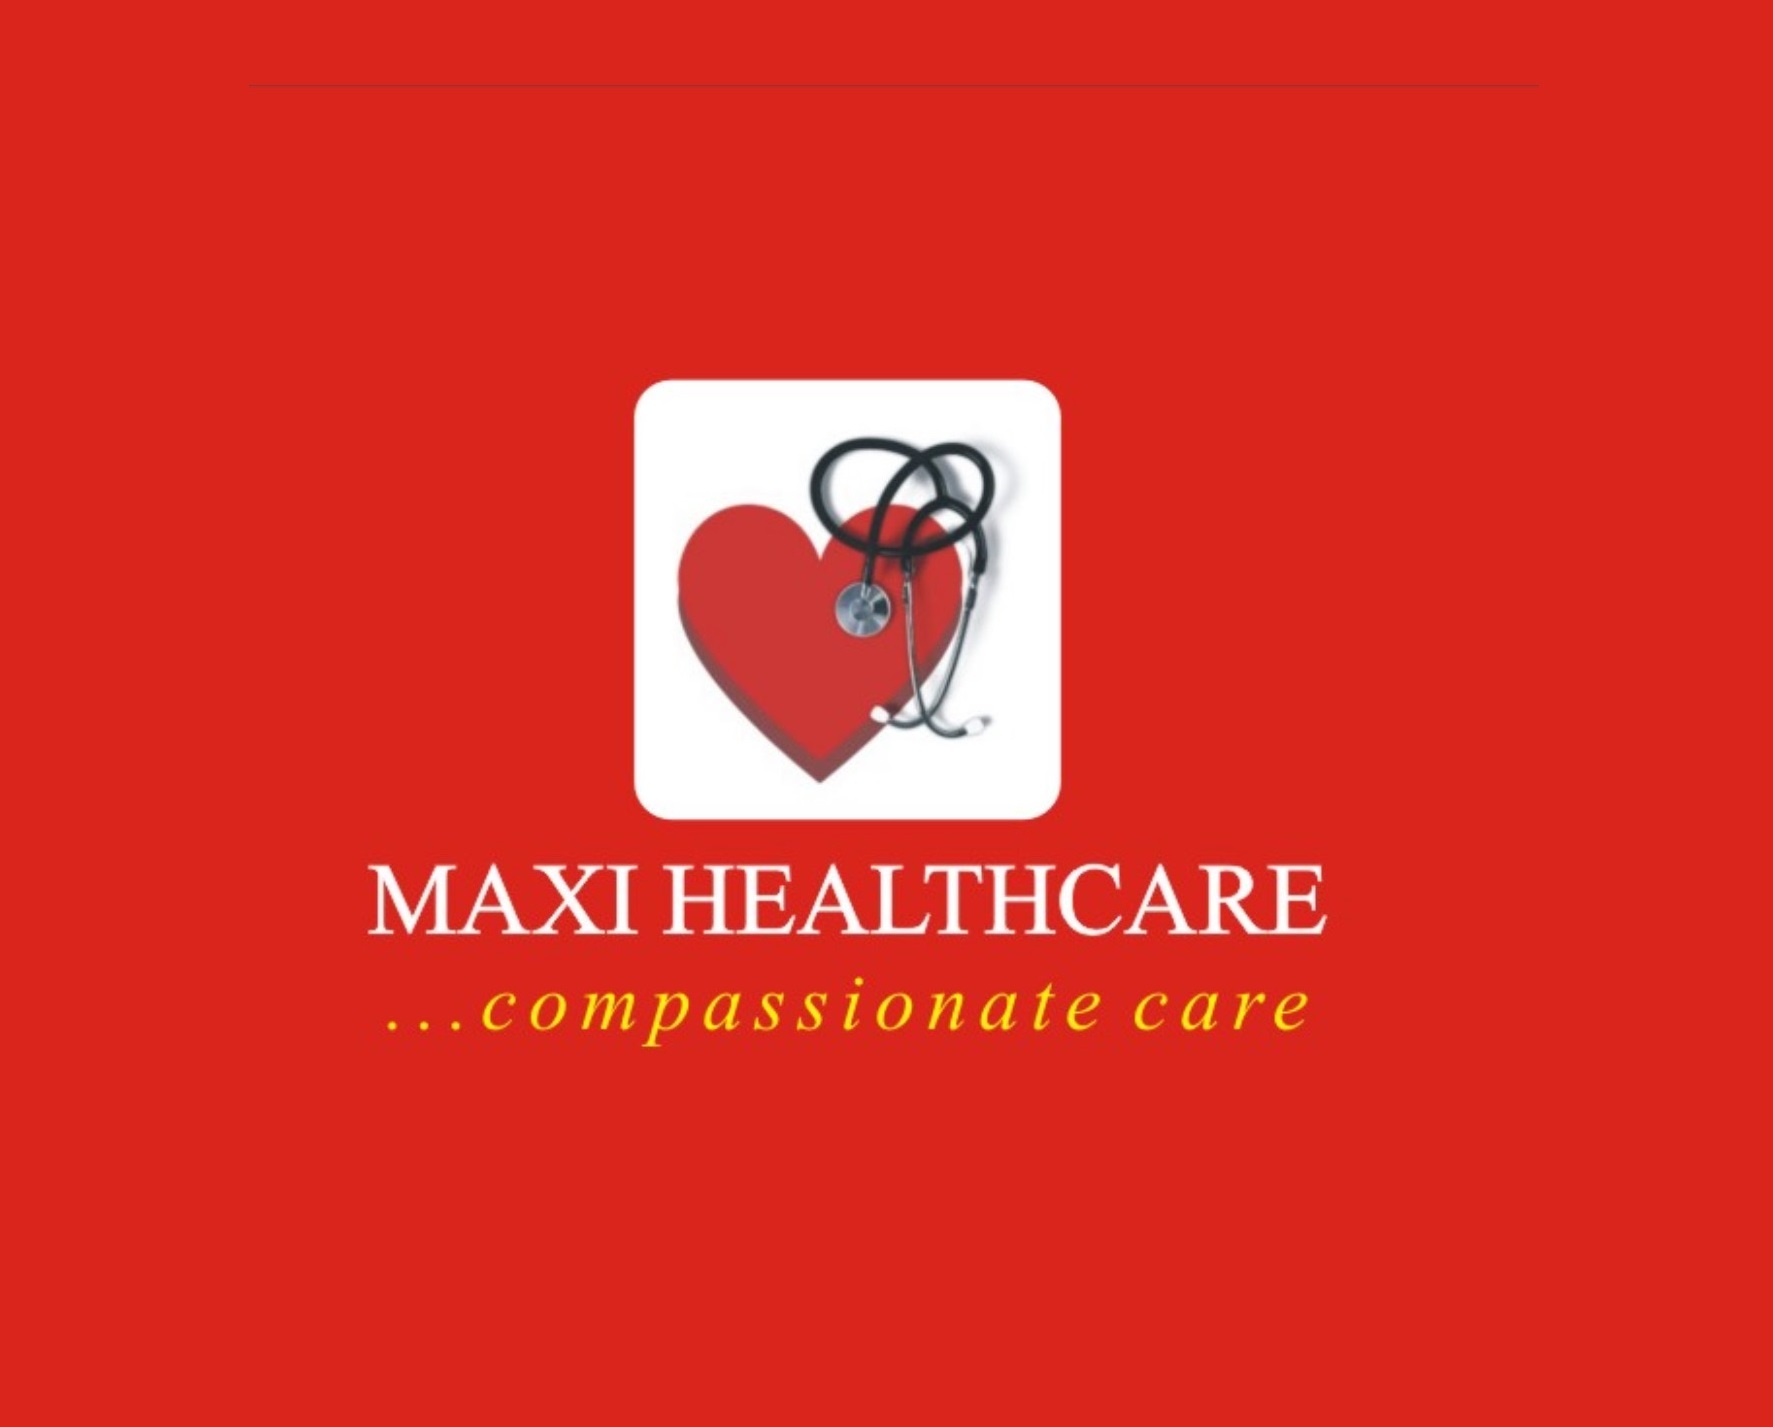 Maxi Healthcare image